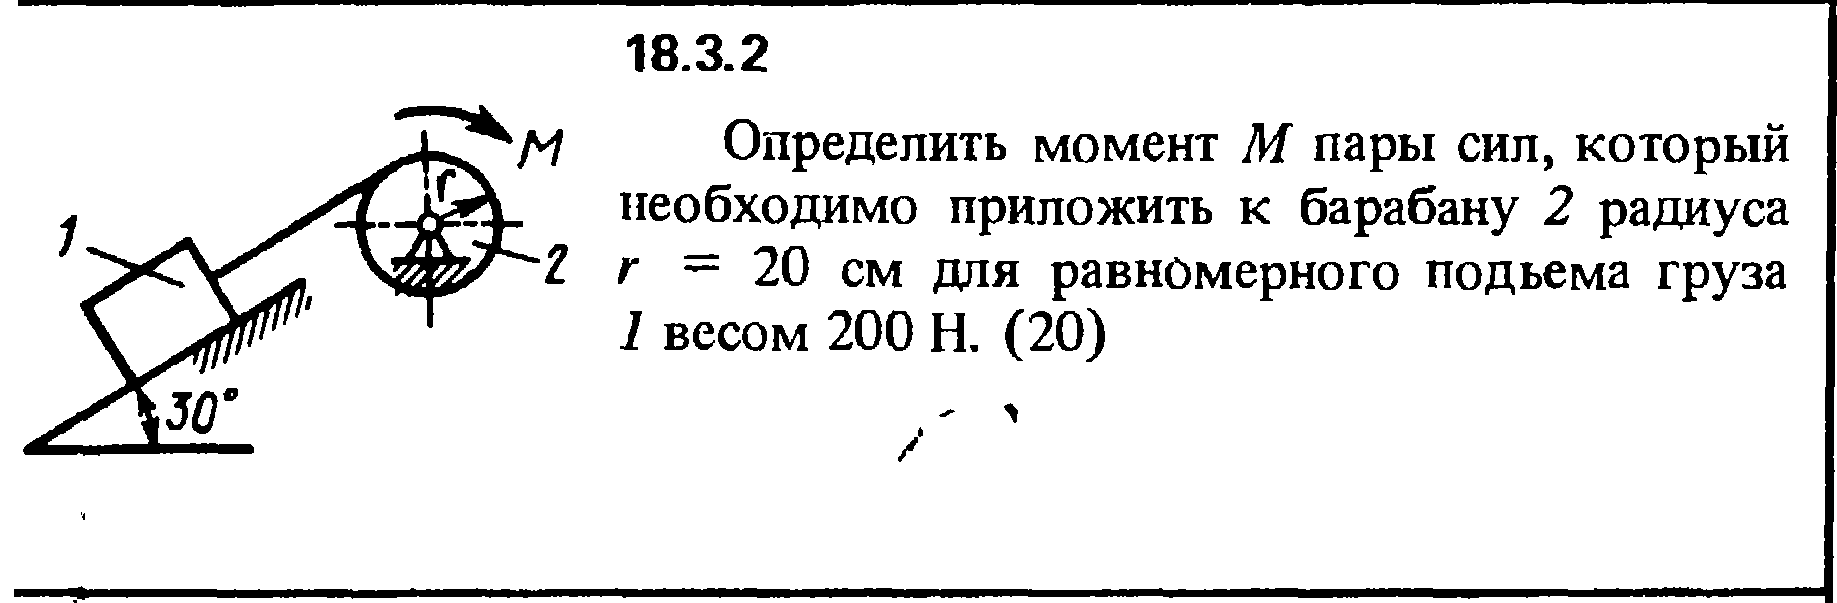 Решение 18.3.2 из сборника (решебника) Кепе О.Е. 1989